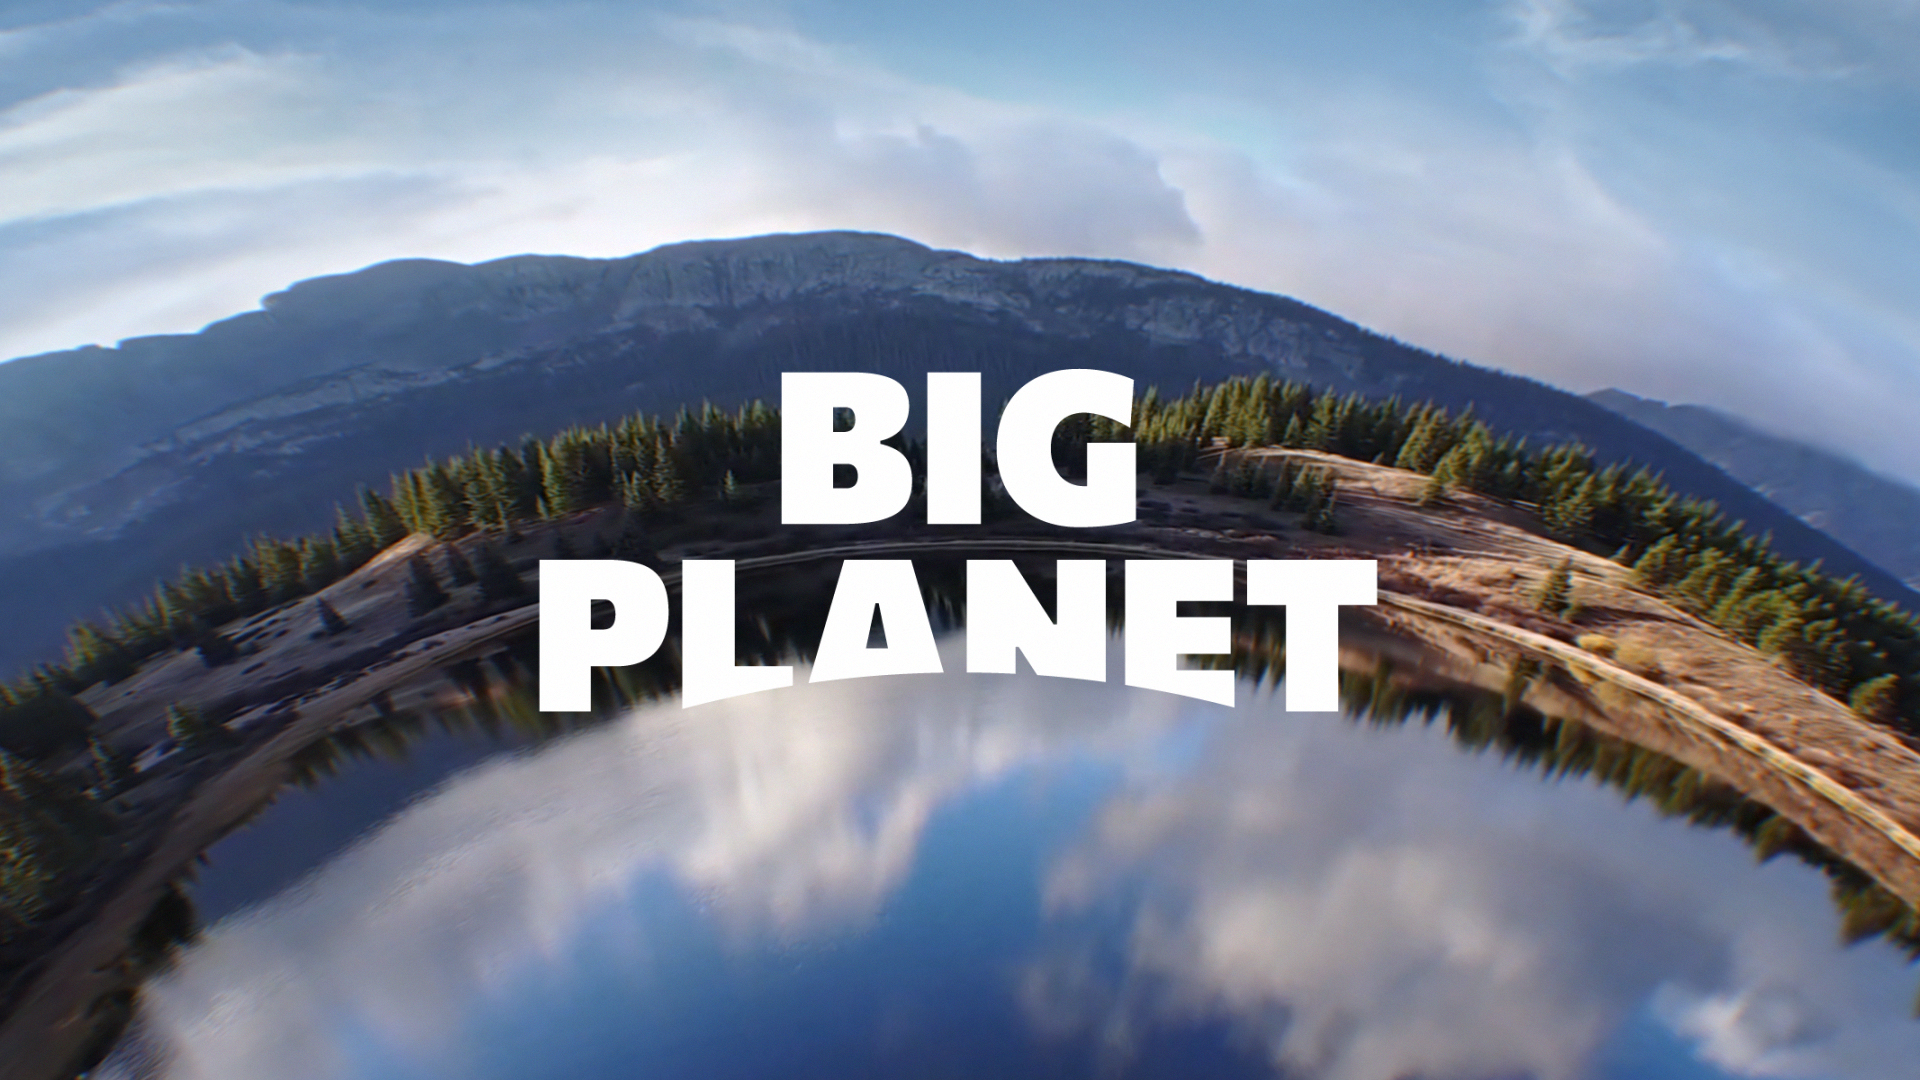 Big planet